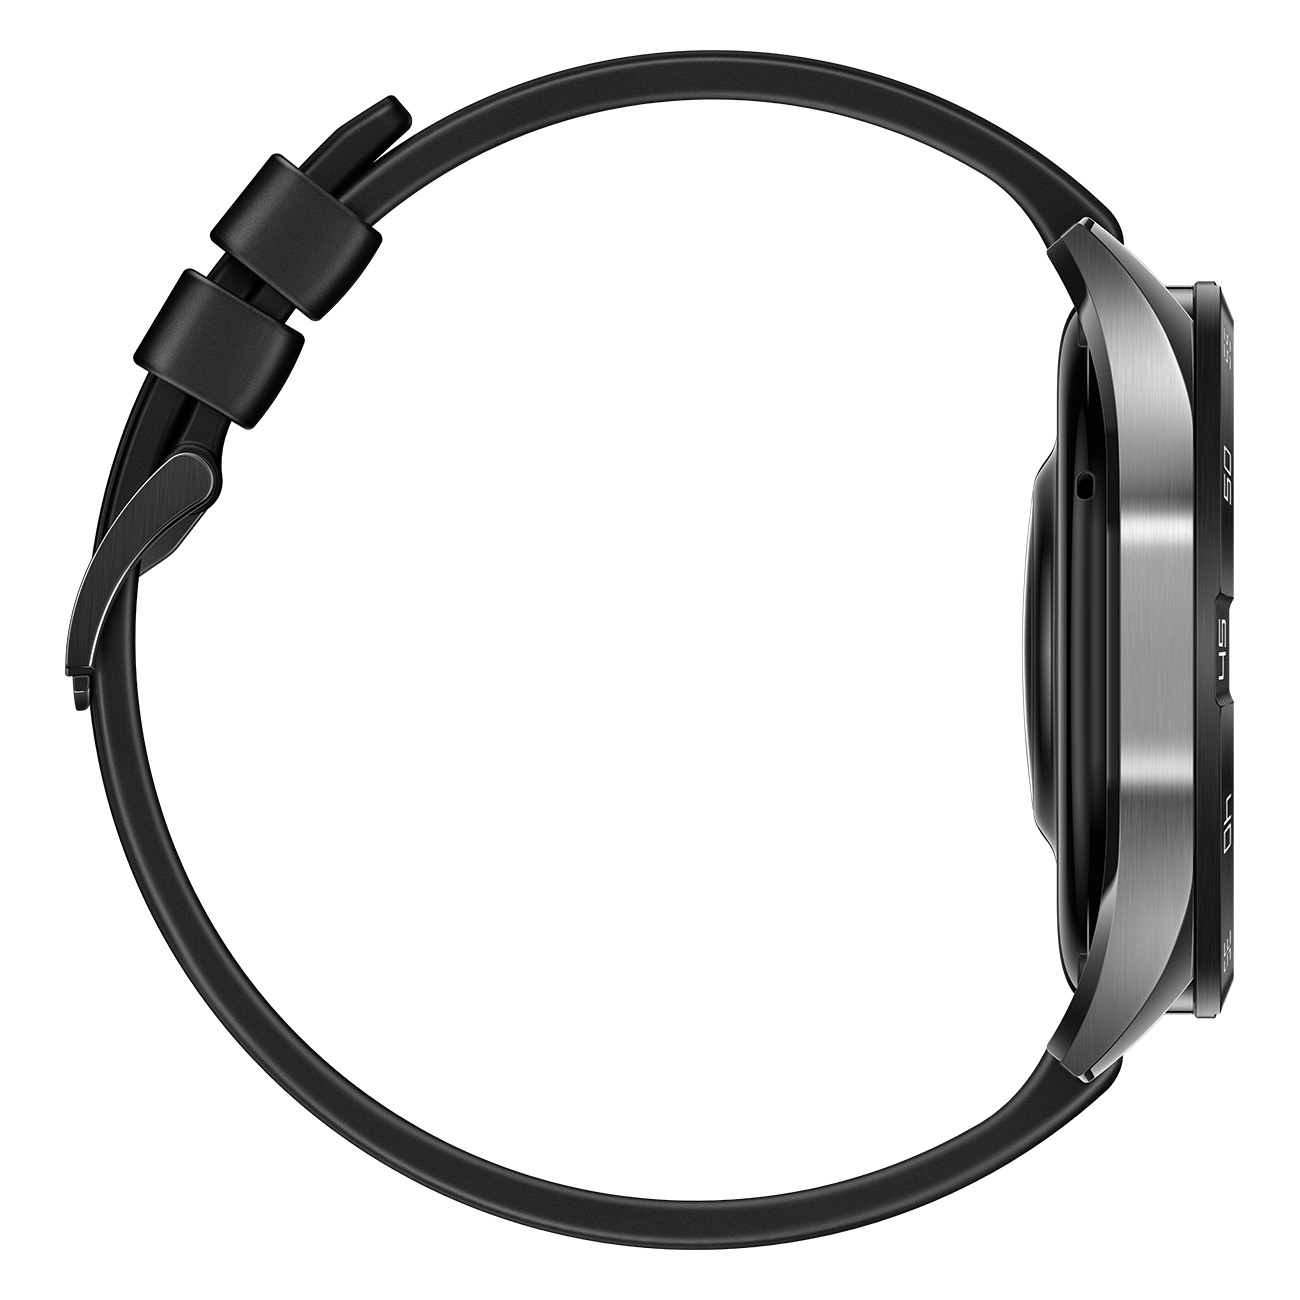 GT4 Fluoroelastomer, HUAWEI Watch schwarz Smartwatch